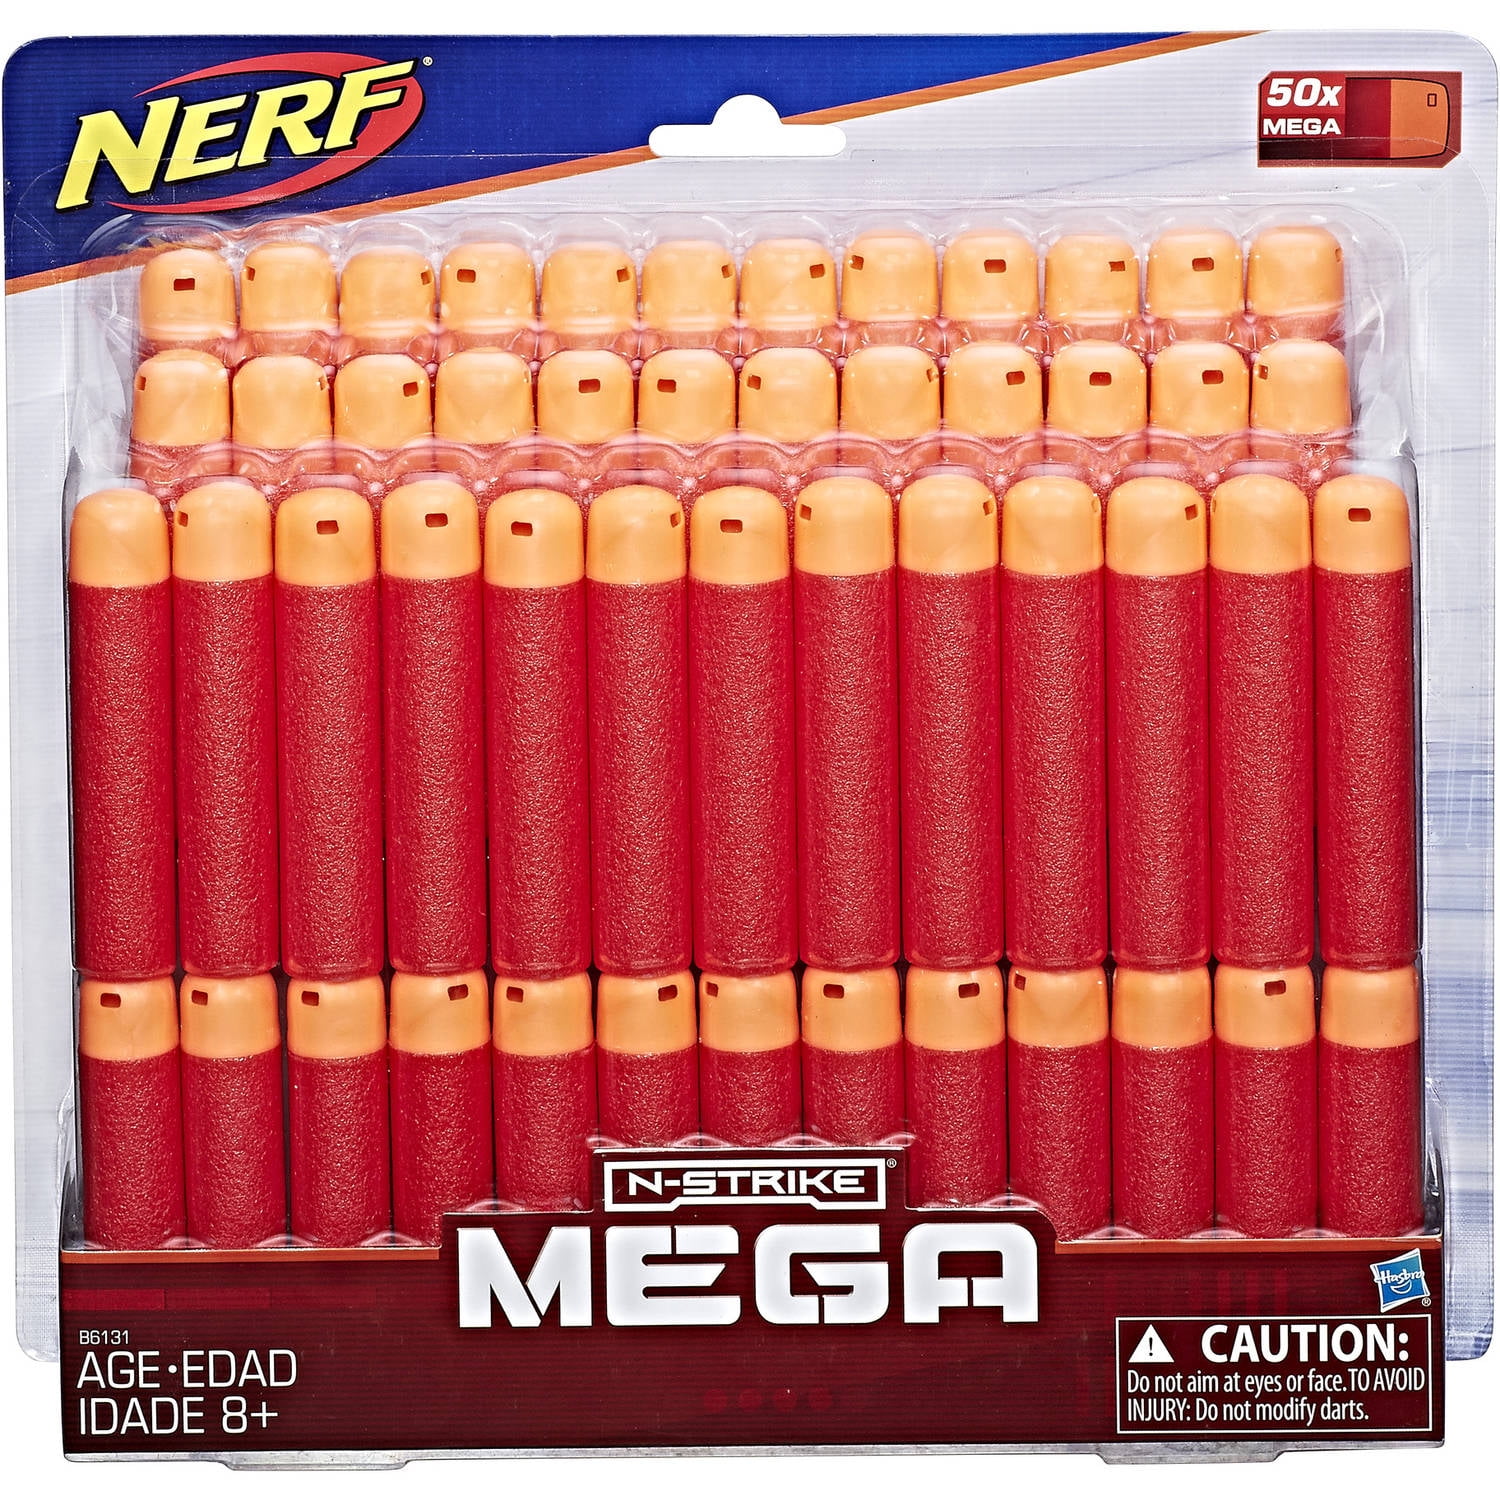 50 100 Nerf Gun Soft Bullets Round Head Blasters for N-steike Refill Mega Darts 